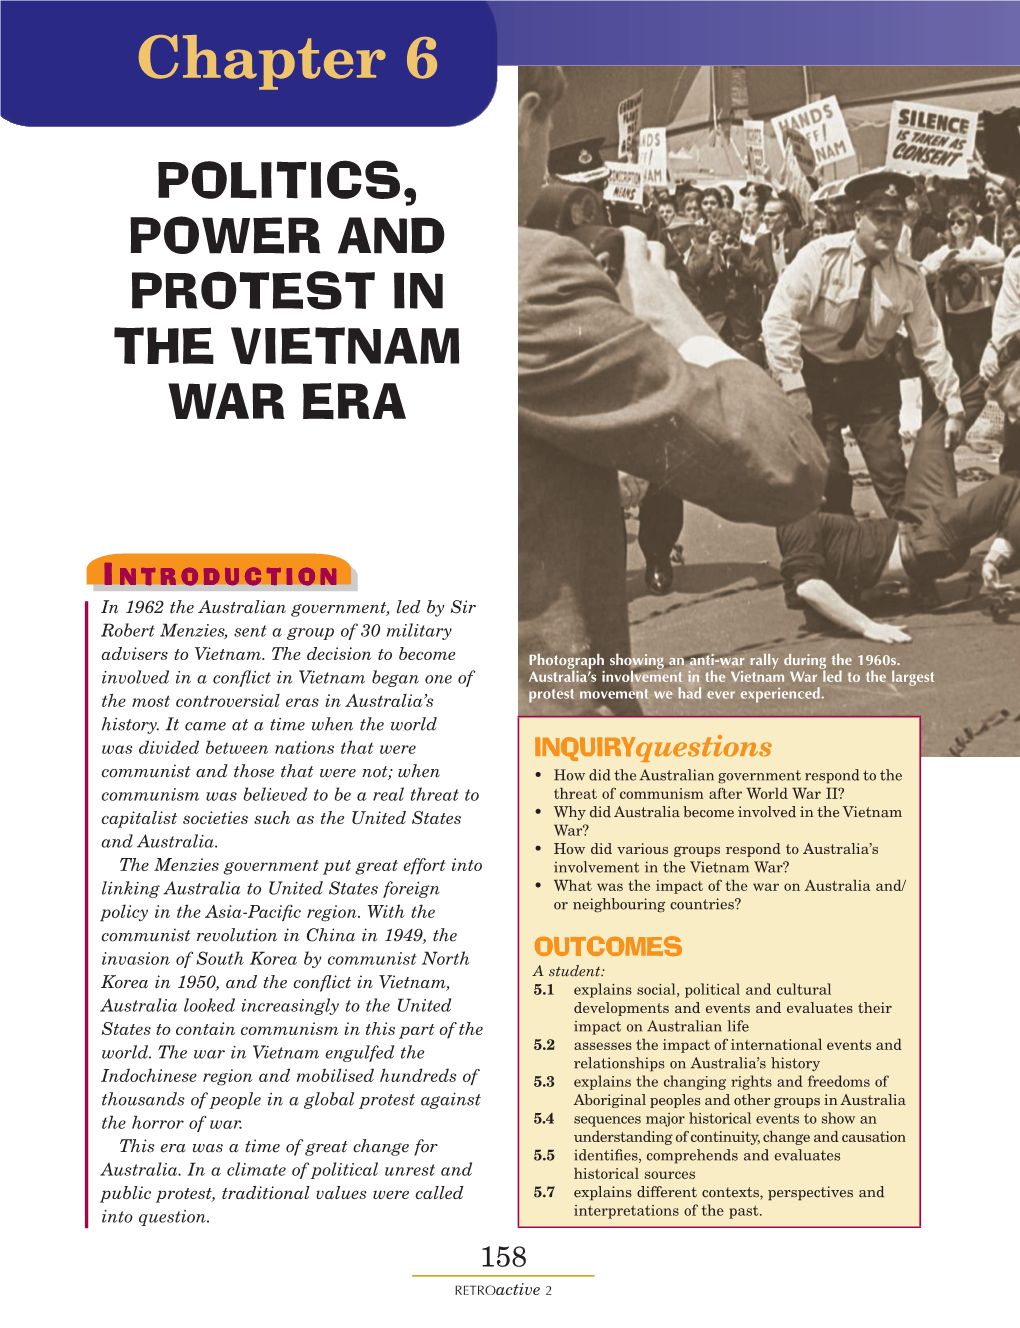 Politics, Power and Protest in the Vietnam War Era